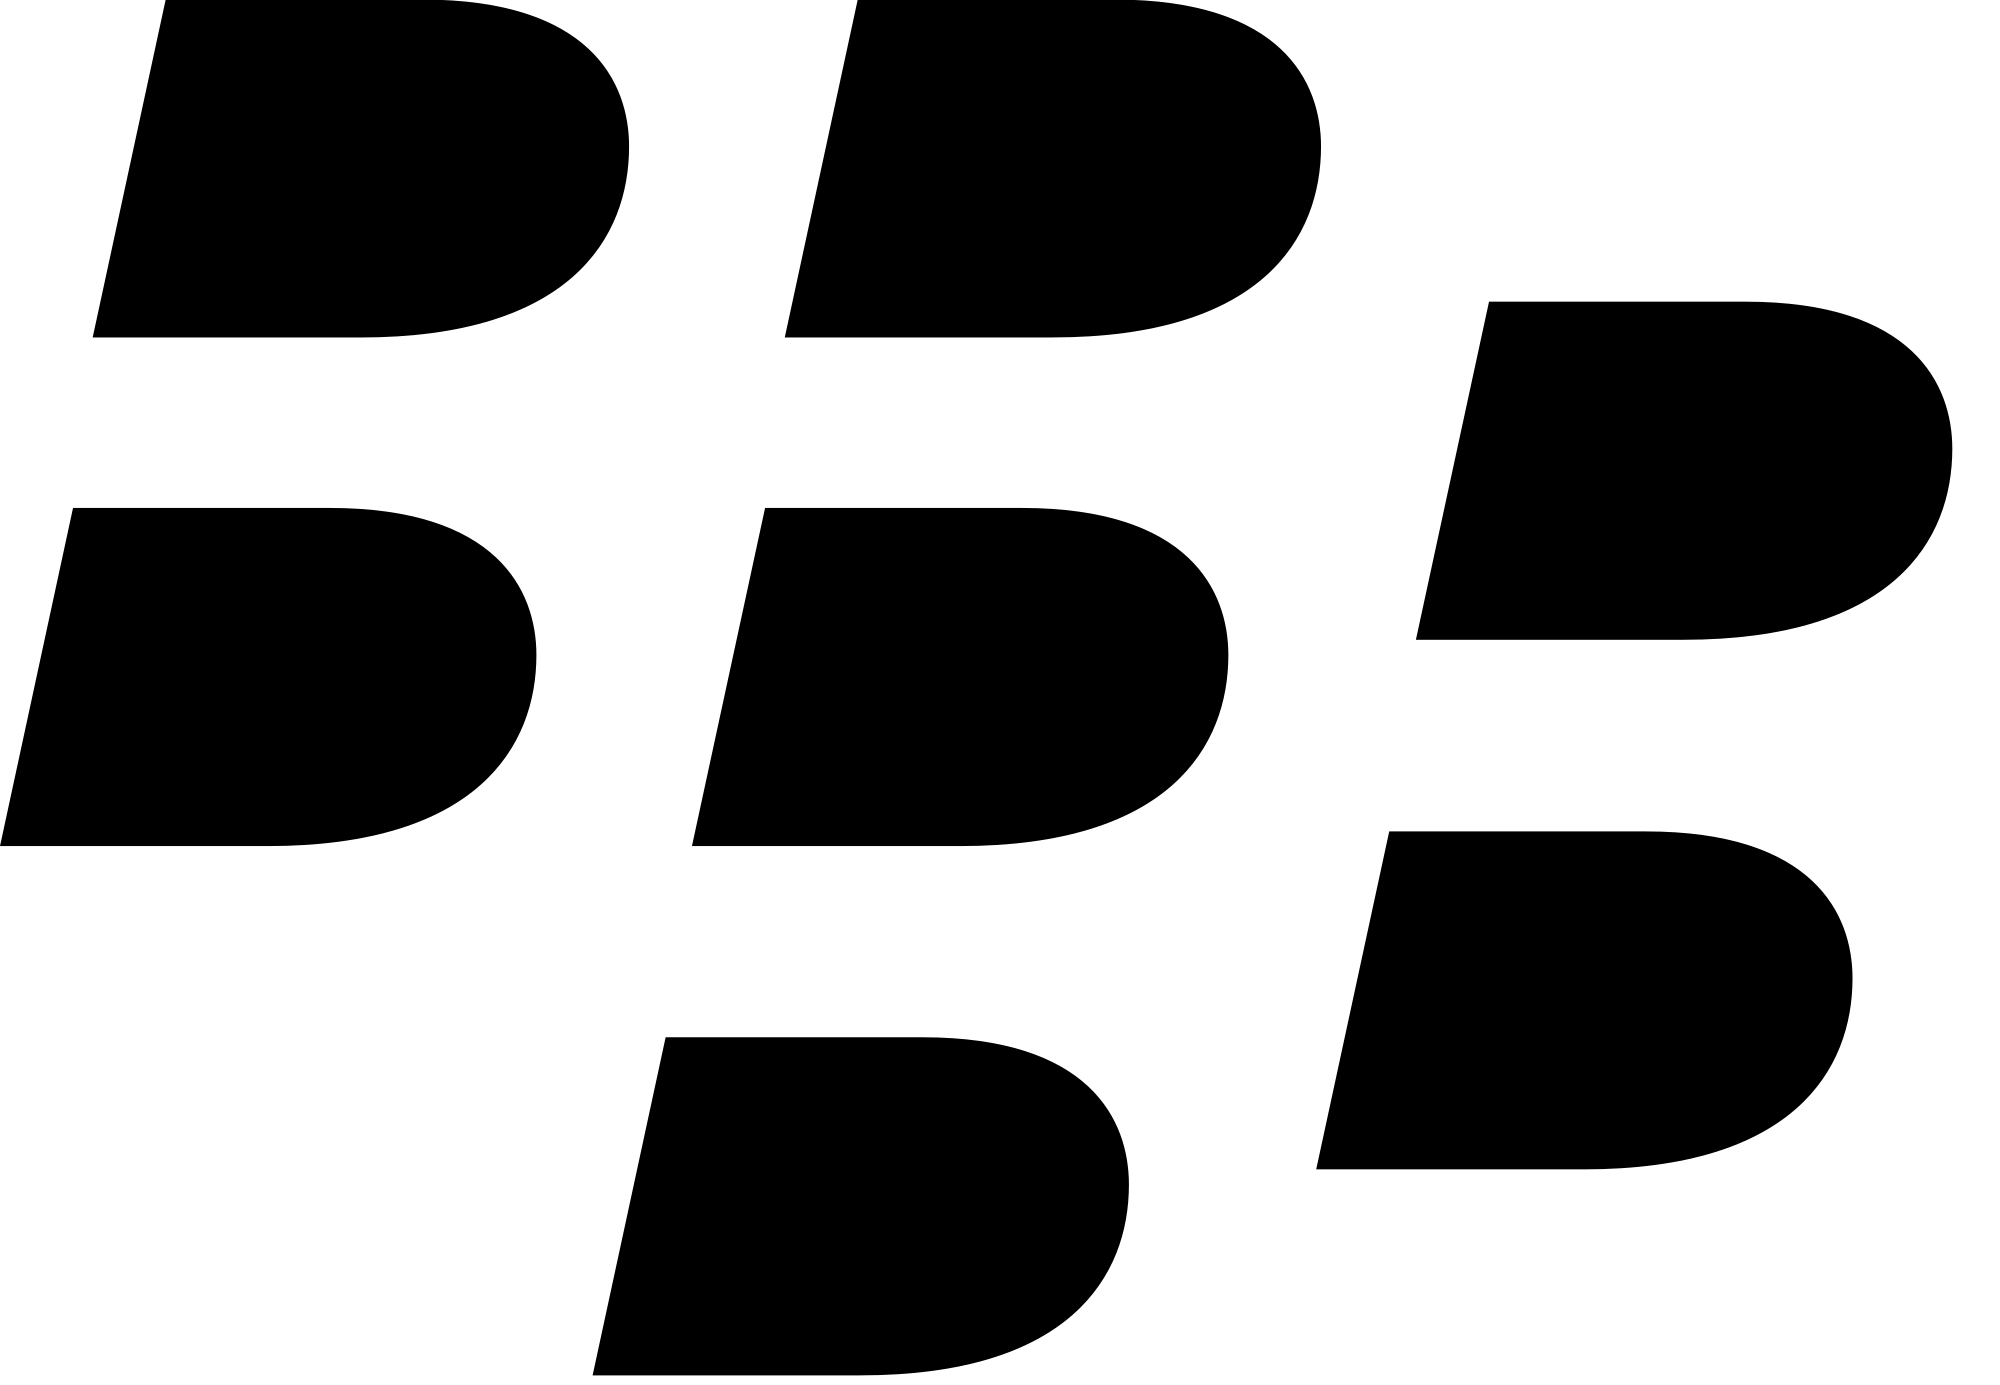 BlackBerry OS Logo - Blackberry Logo without wordmark.svg